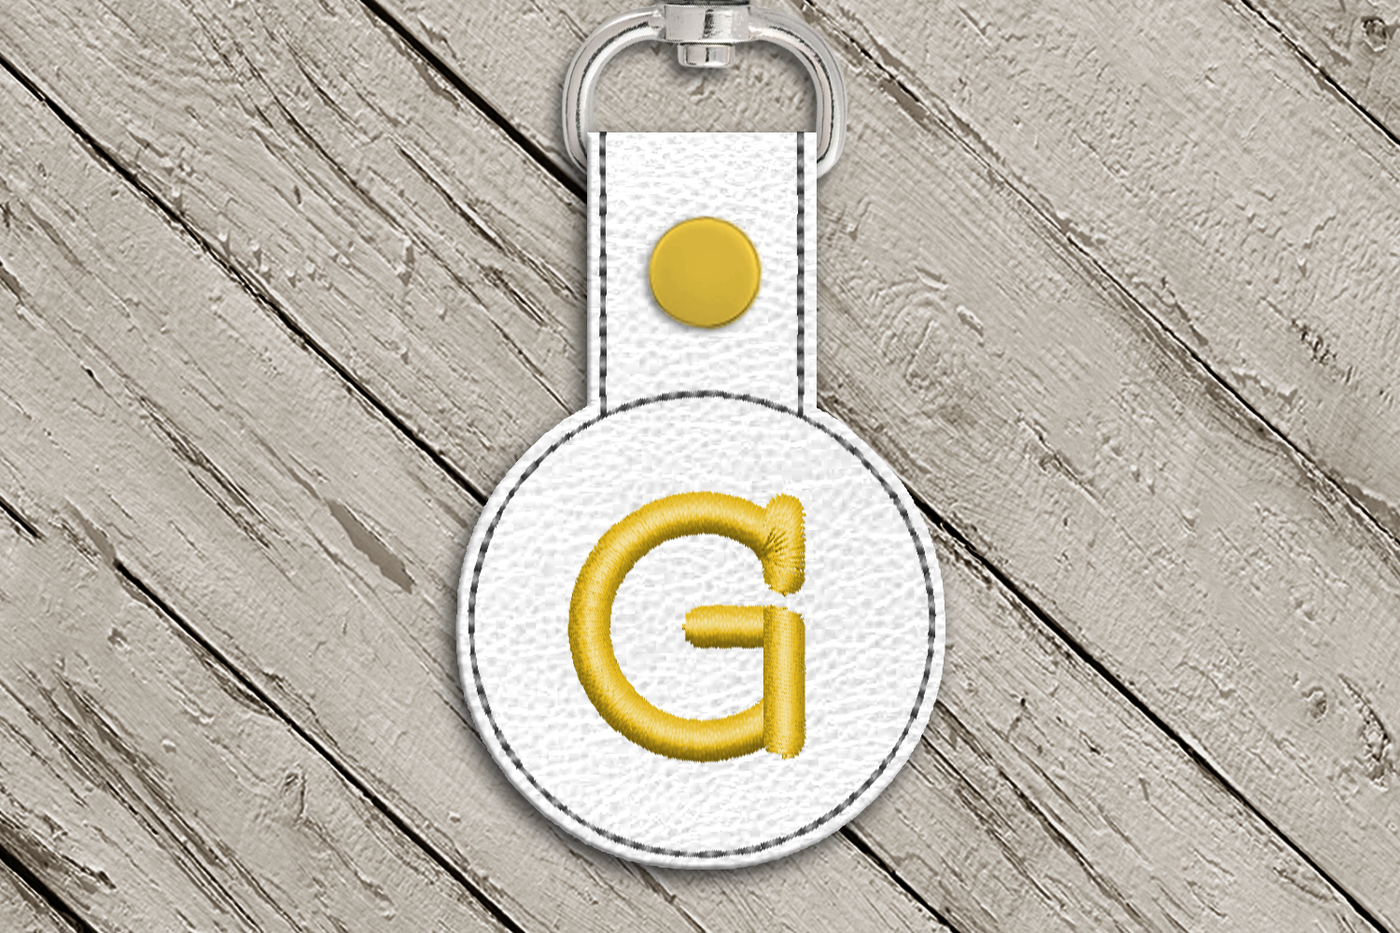 Letter G in the hoop key fob design